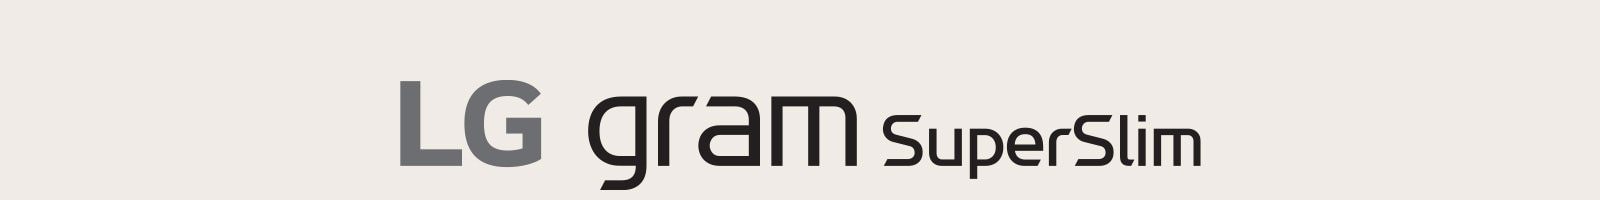 Logo LG gram SuperSlim.